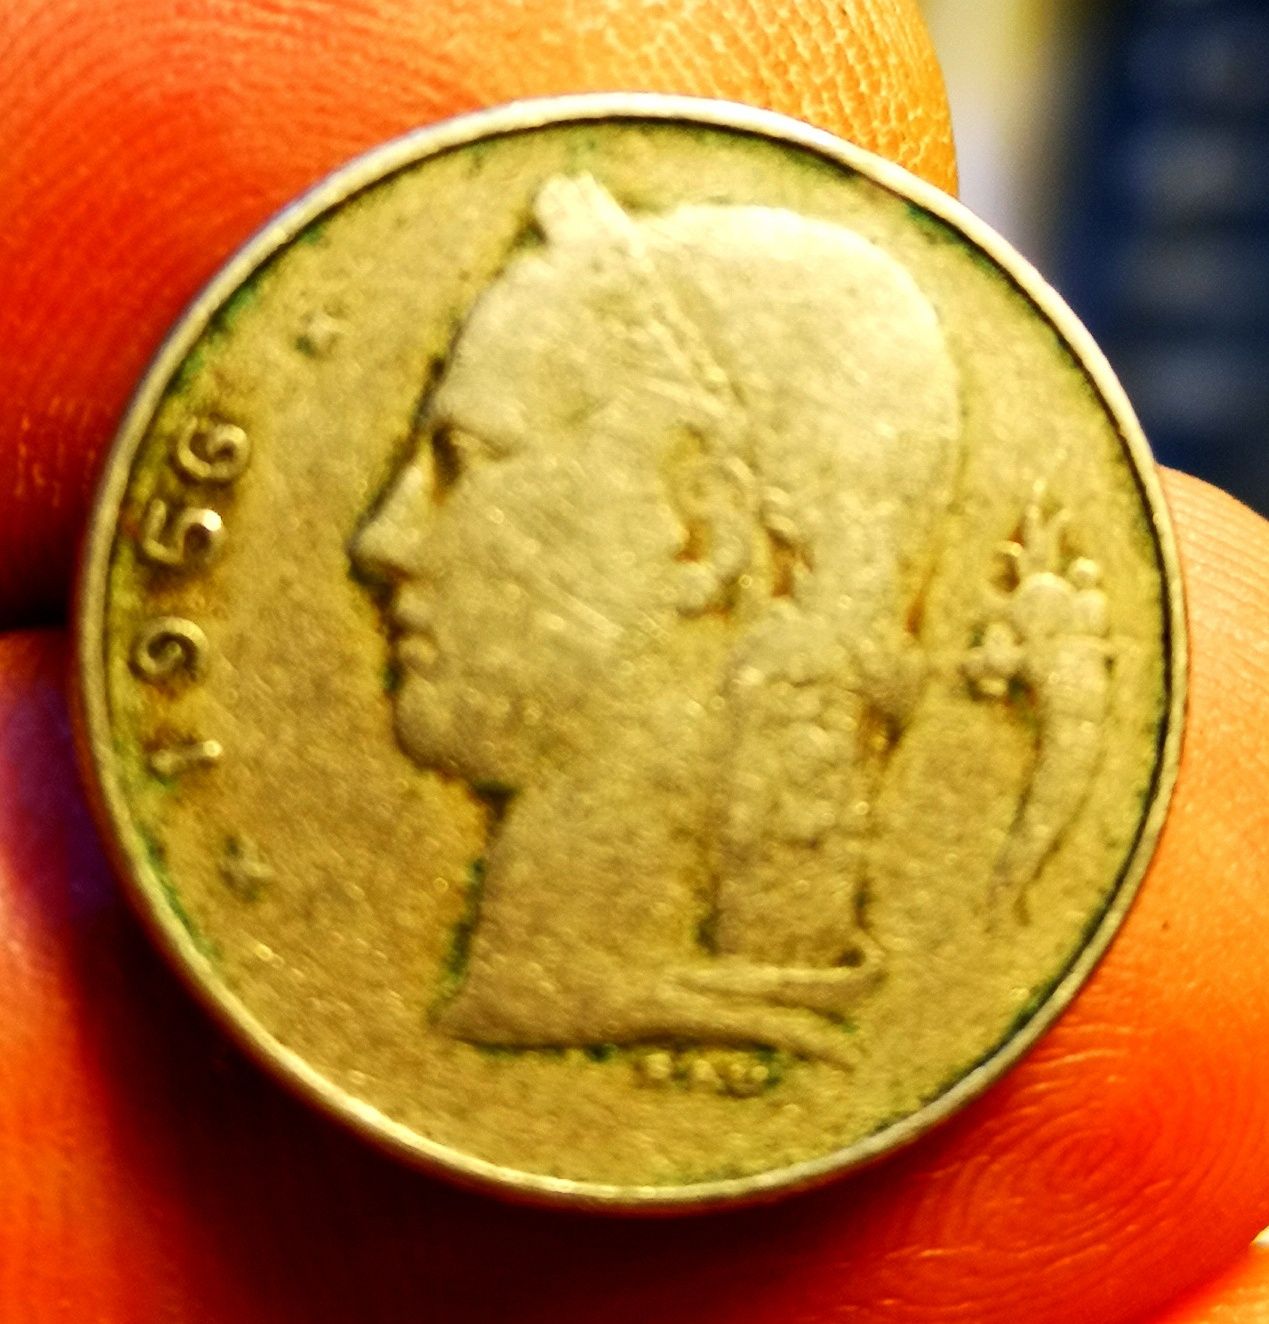 Moneta obiegowa 1 frank Belgia 1956r